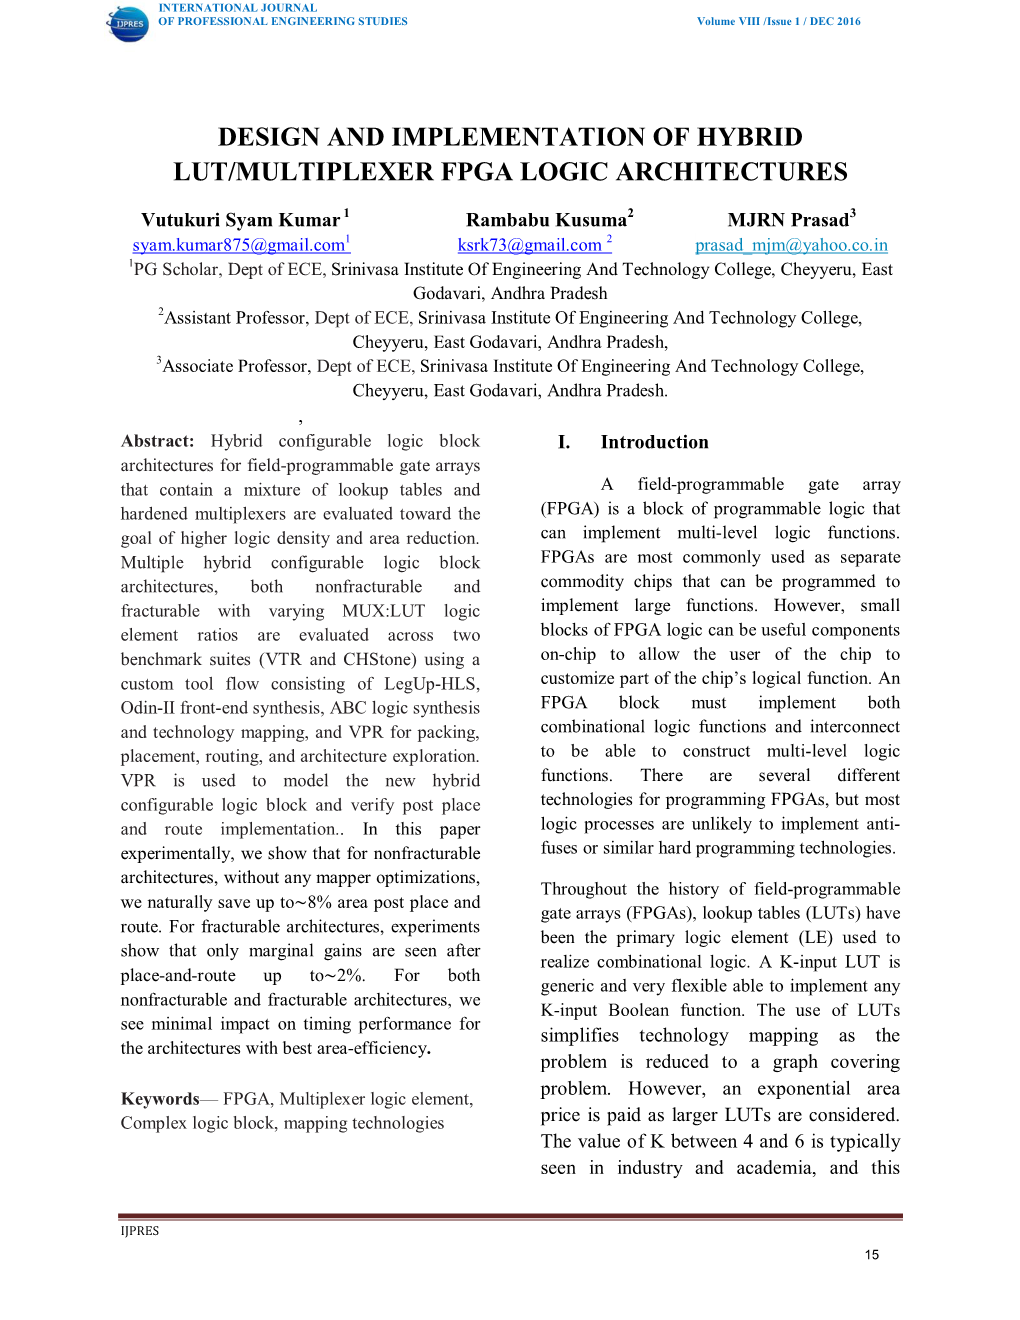 Design and Implementation of Hybrid Lut/Multiplexer Fpga Logic Architectures